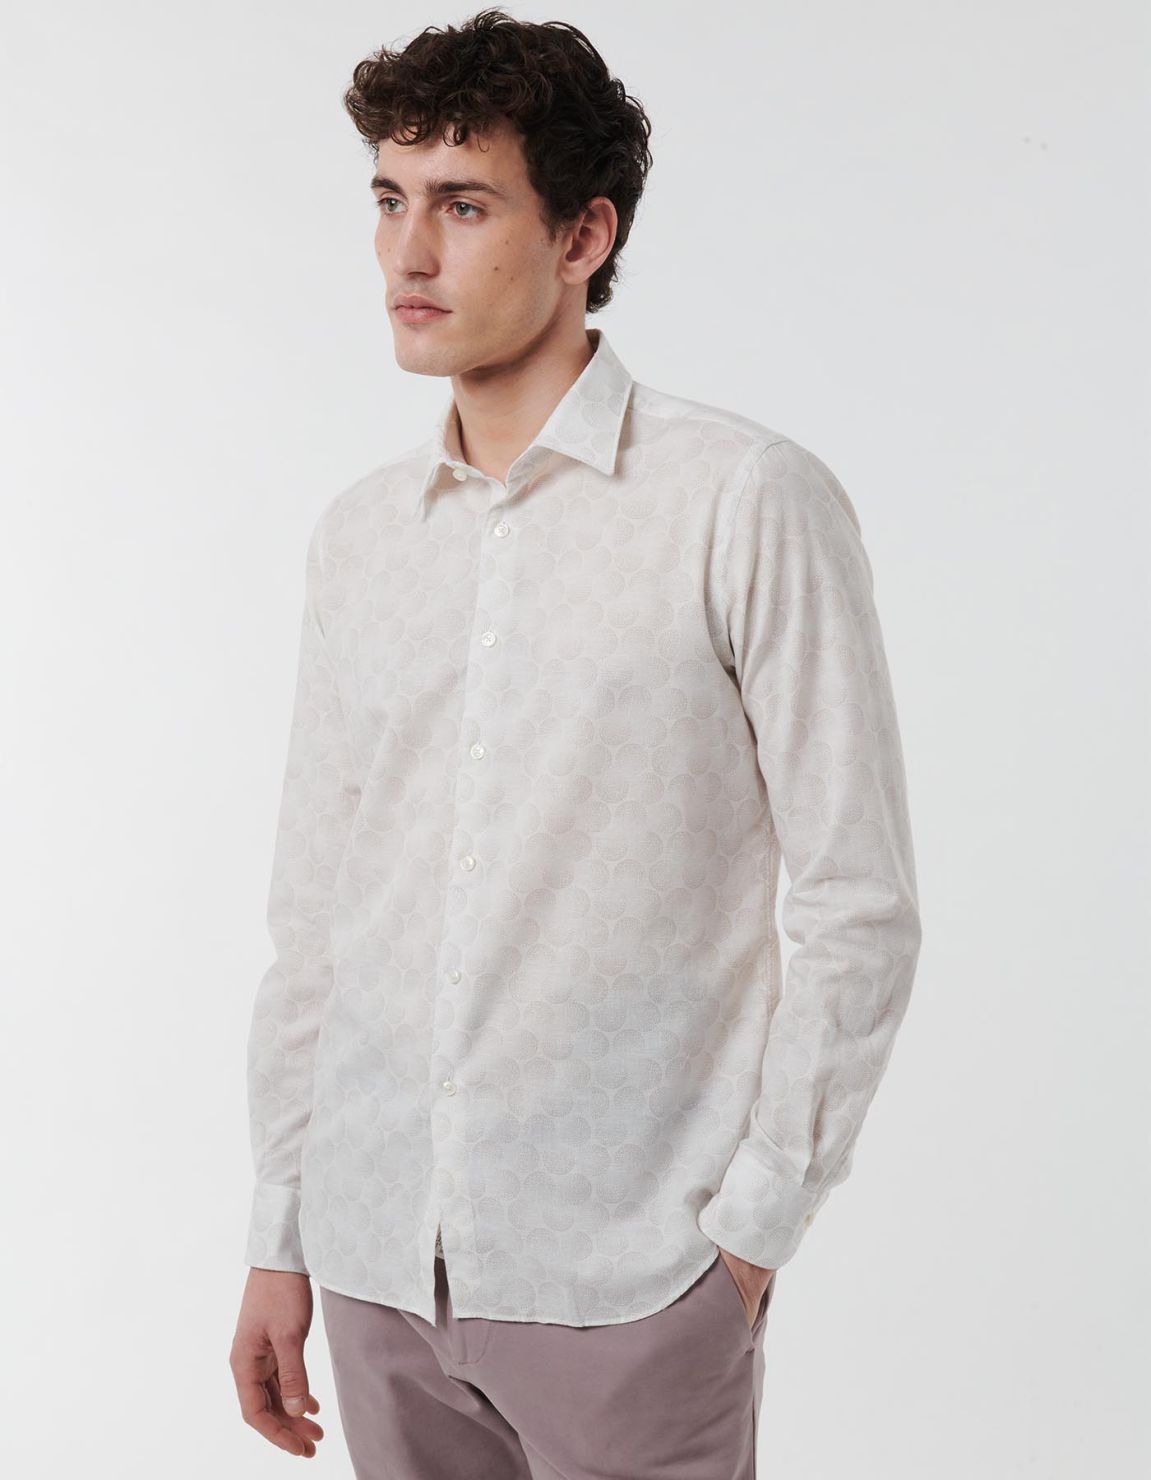 Beige Linen Pattern Shirt Collar spread Tailor Custom Fit 7